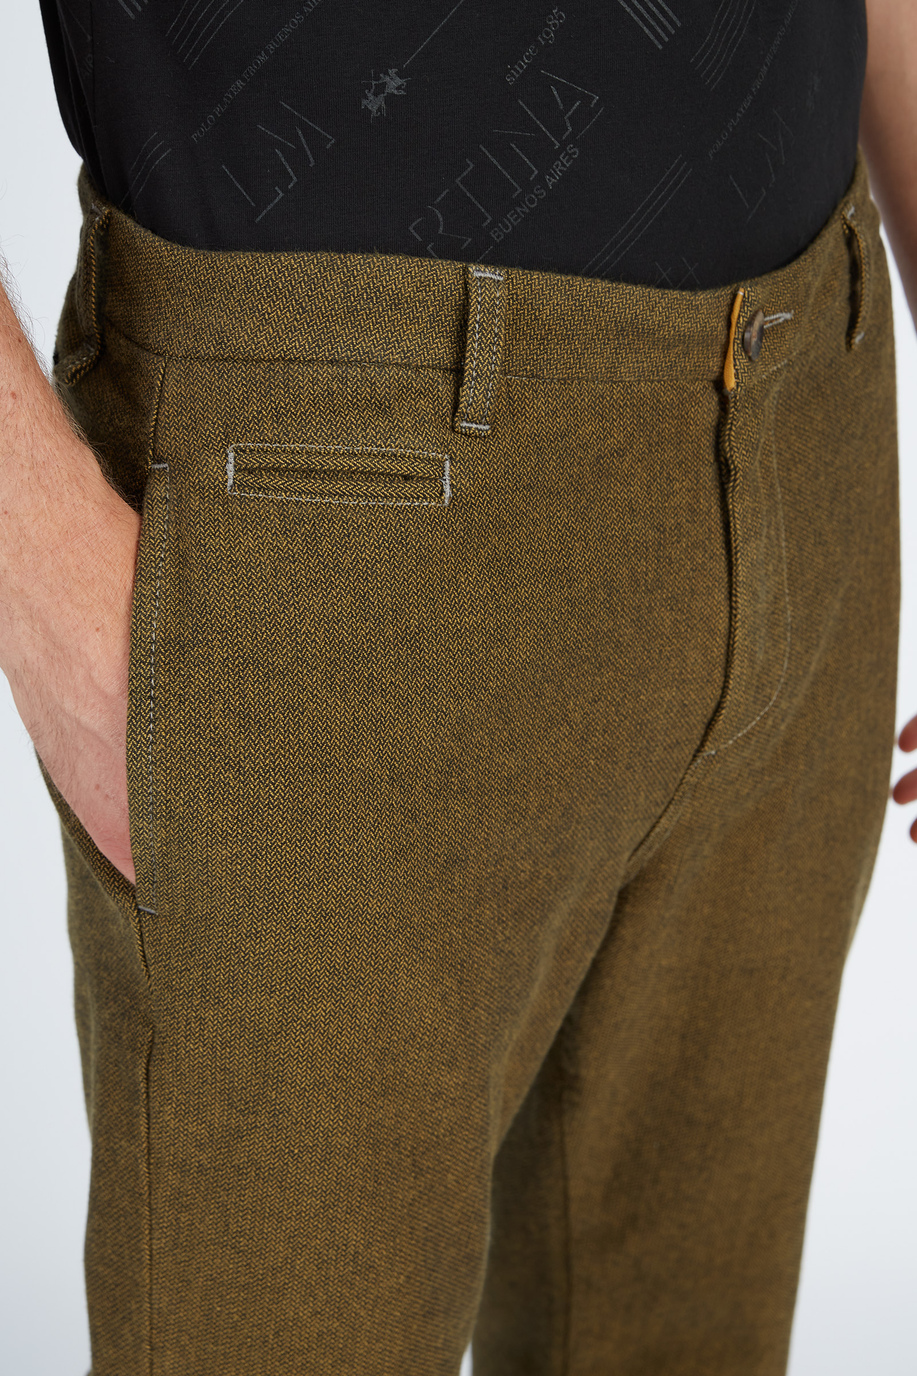 Men’s trousers 5 pockets regular fit cotton - Argentina | La Martina - Official Online Shop